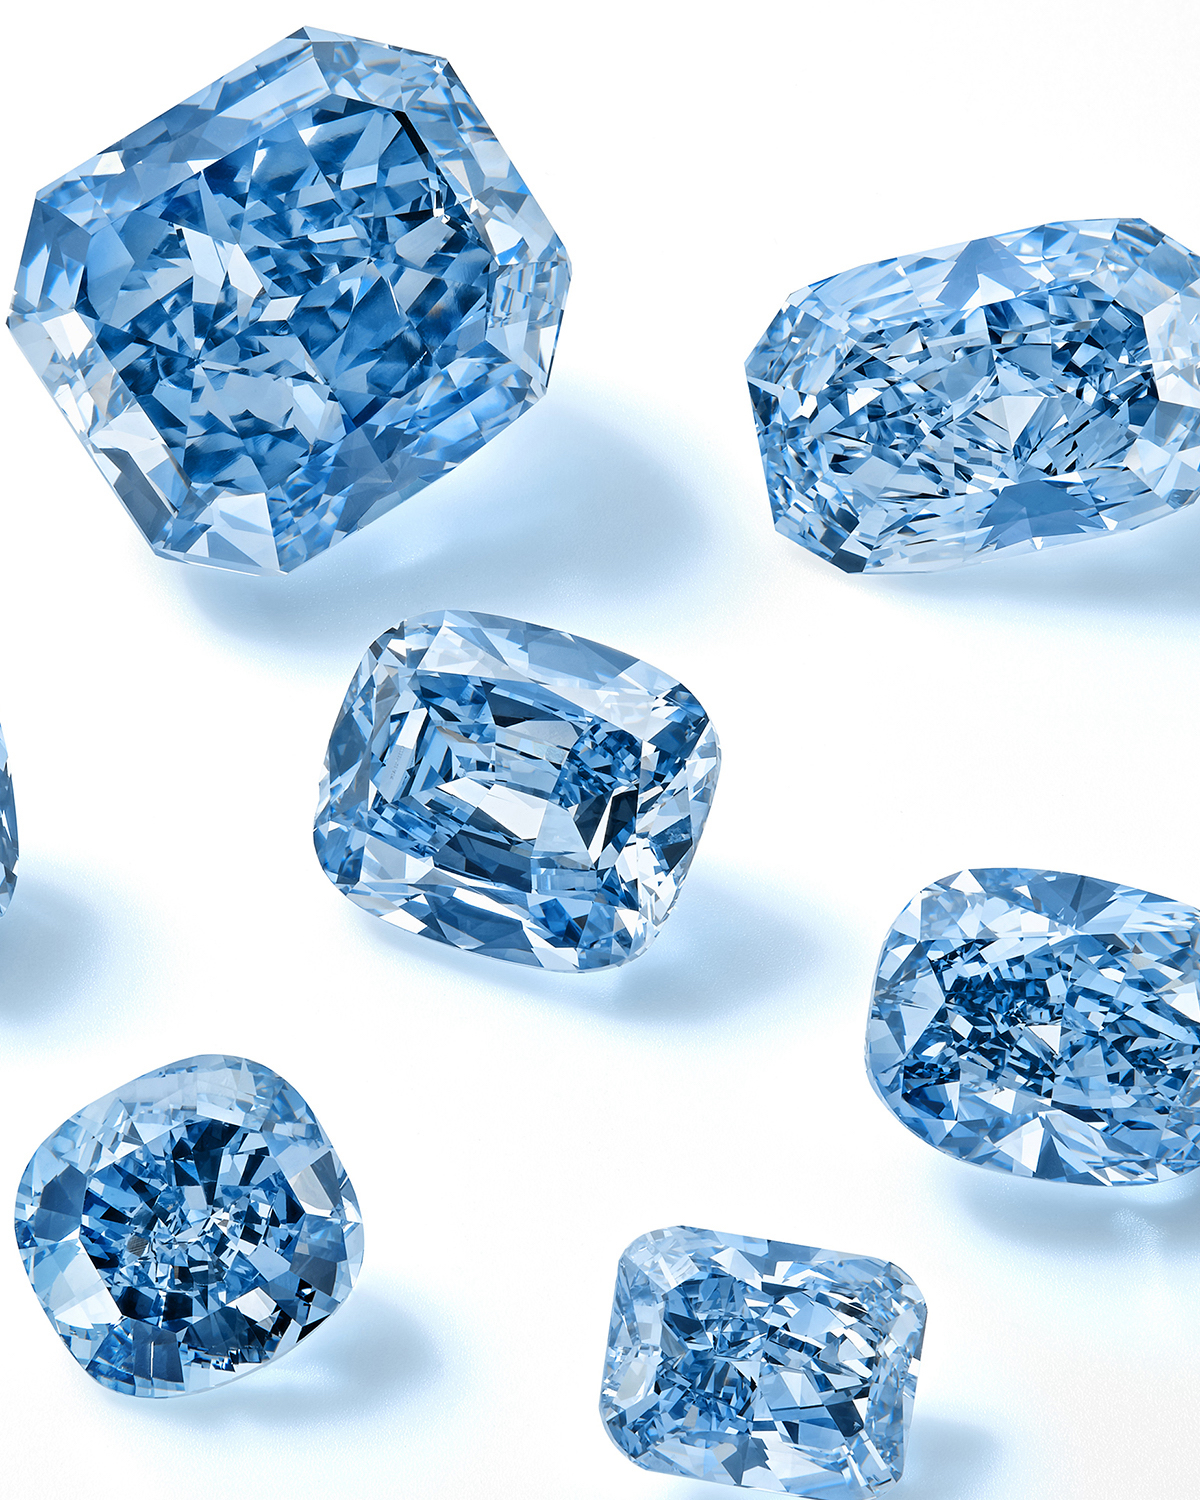 Blue Diamond - Blue Diamond added a new photo.